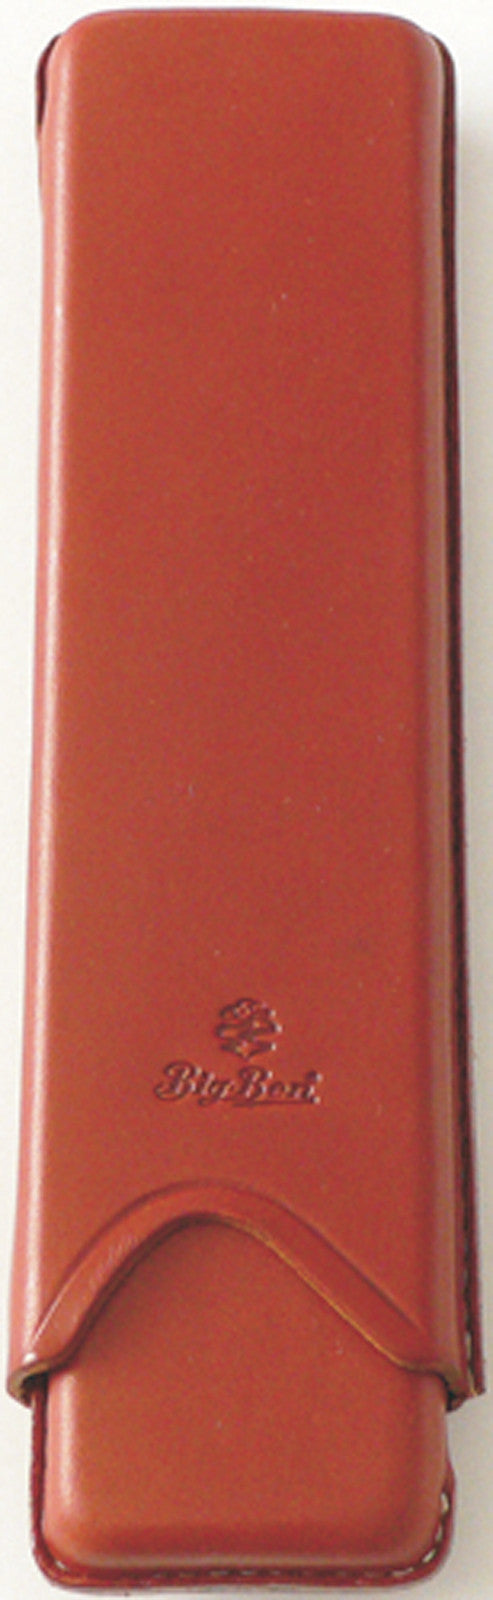 BigBen genuine leather cigar case 2 churchill saddle 651.109.200